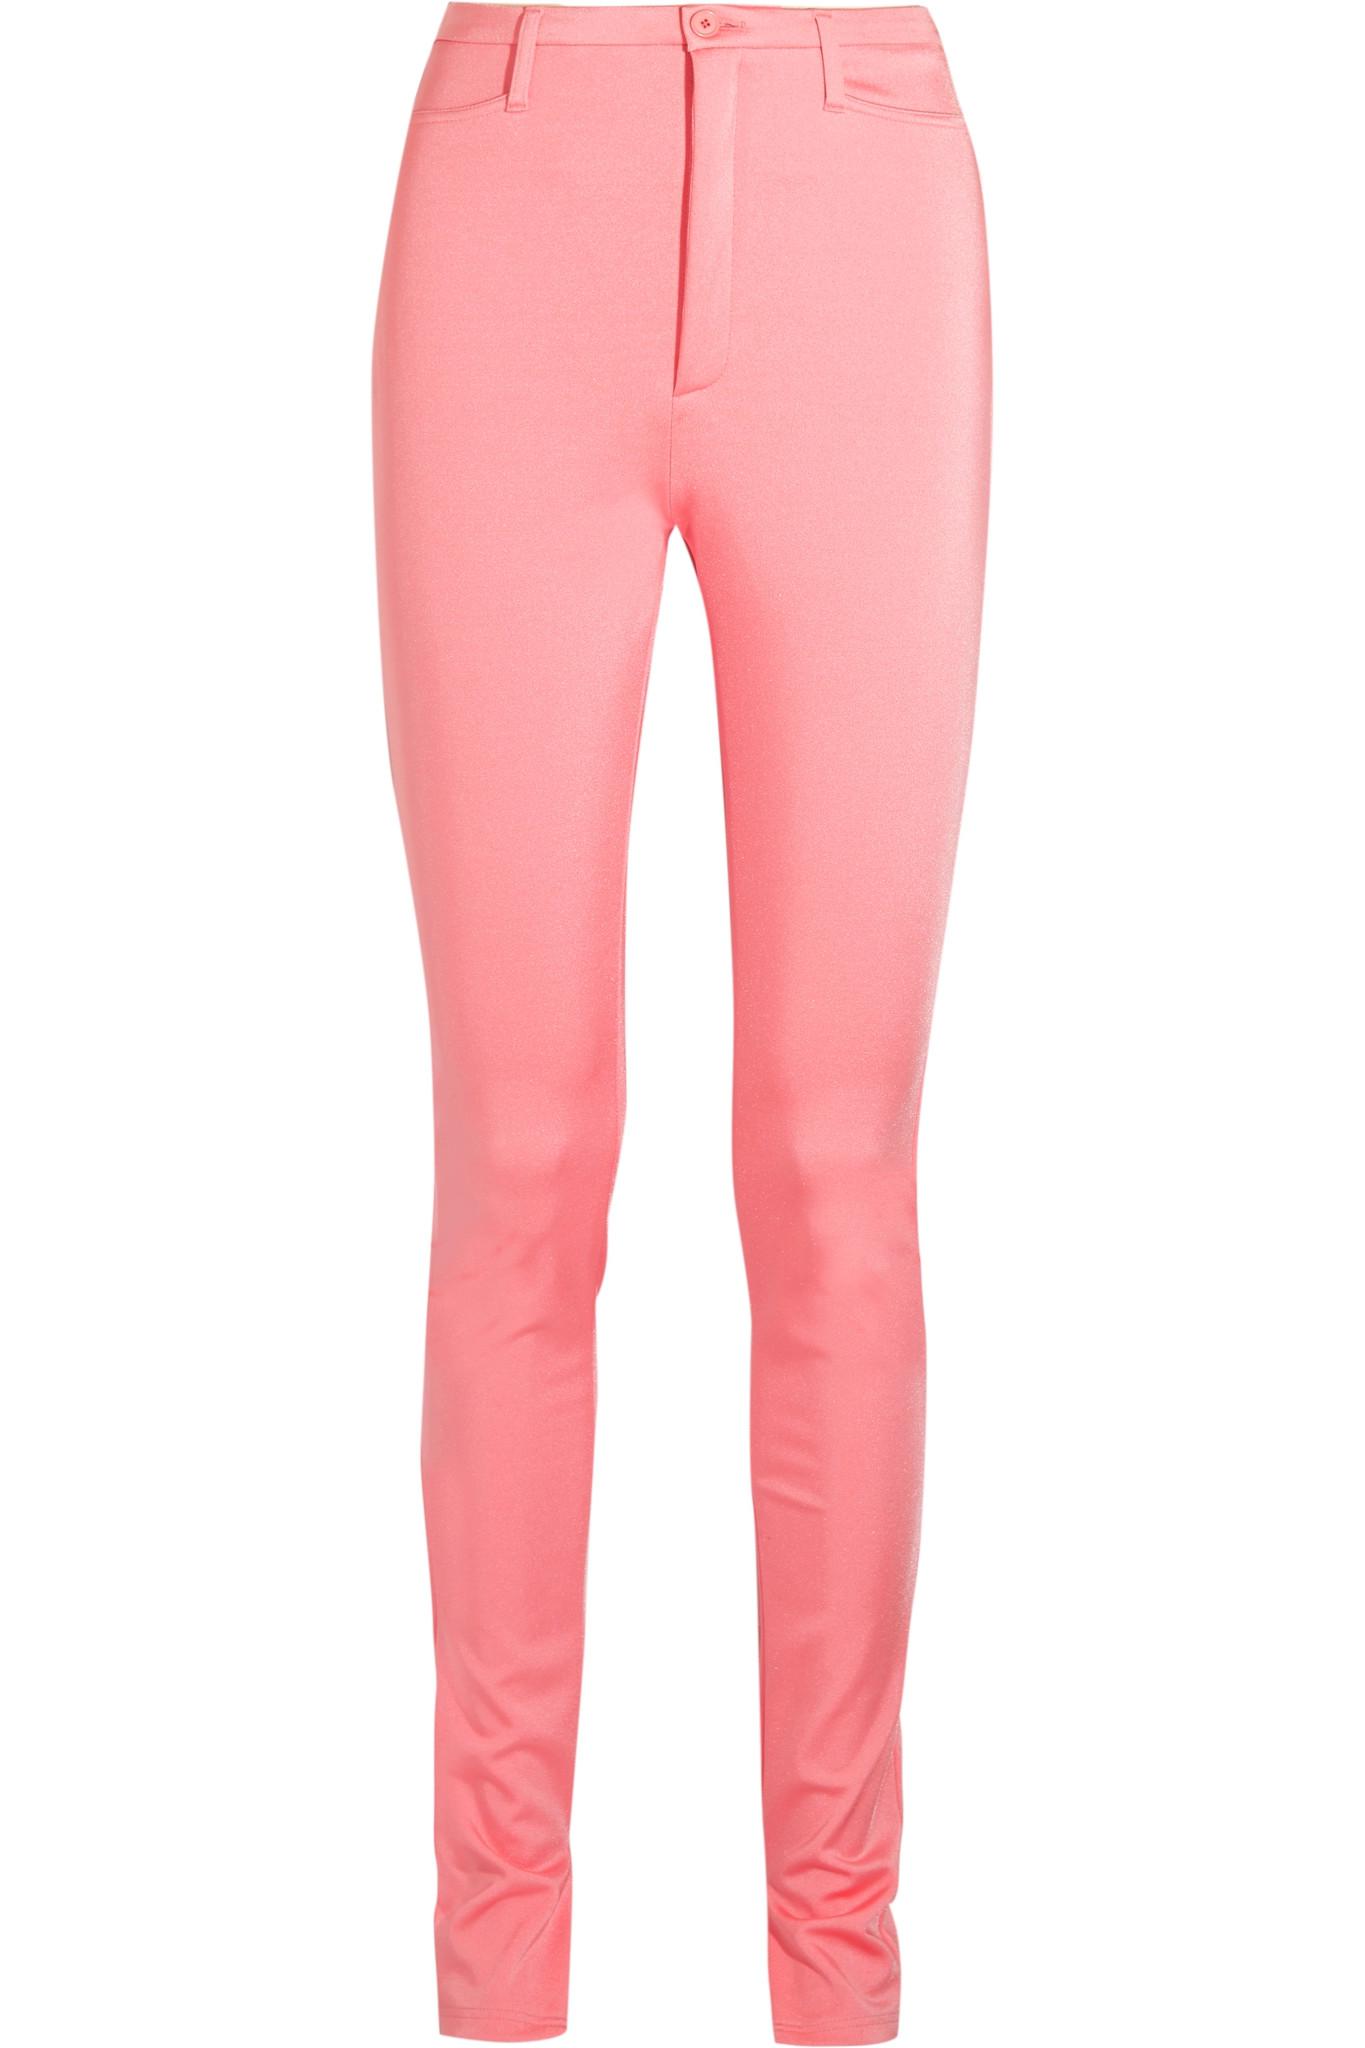 Lyst - Balenciaga Stretch-satin Skinny Pants in Pink